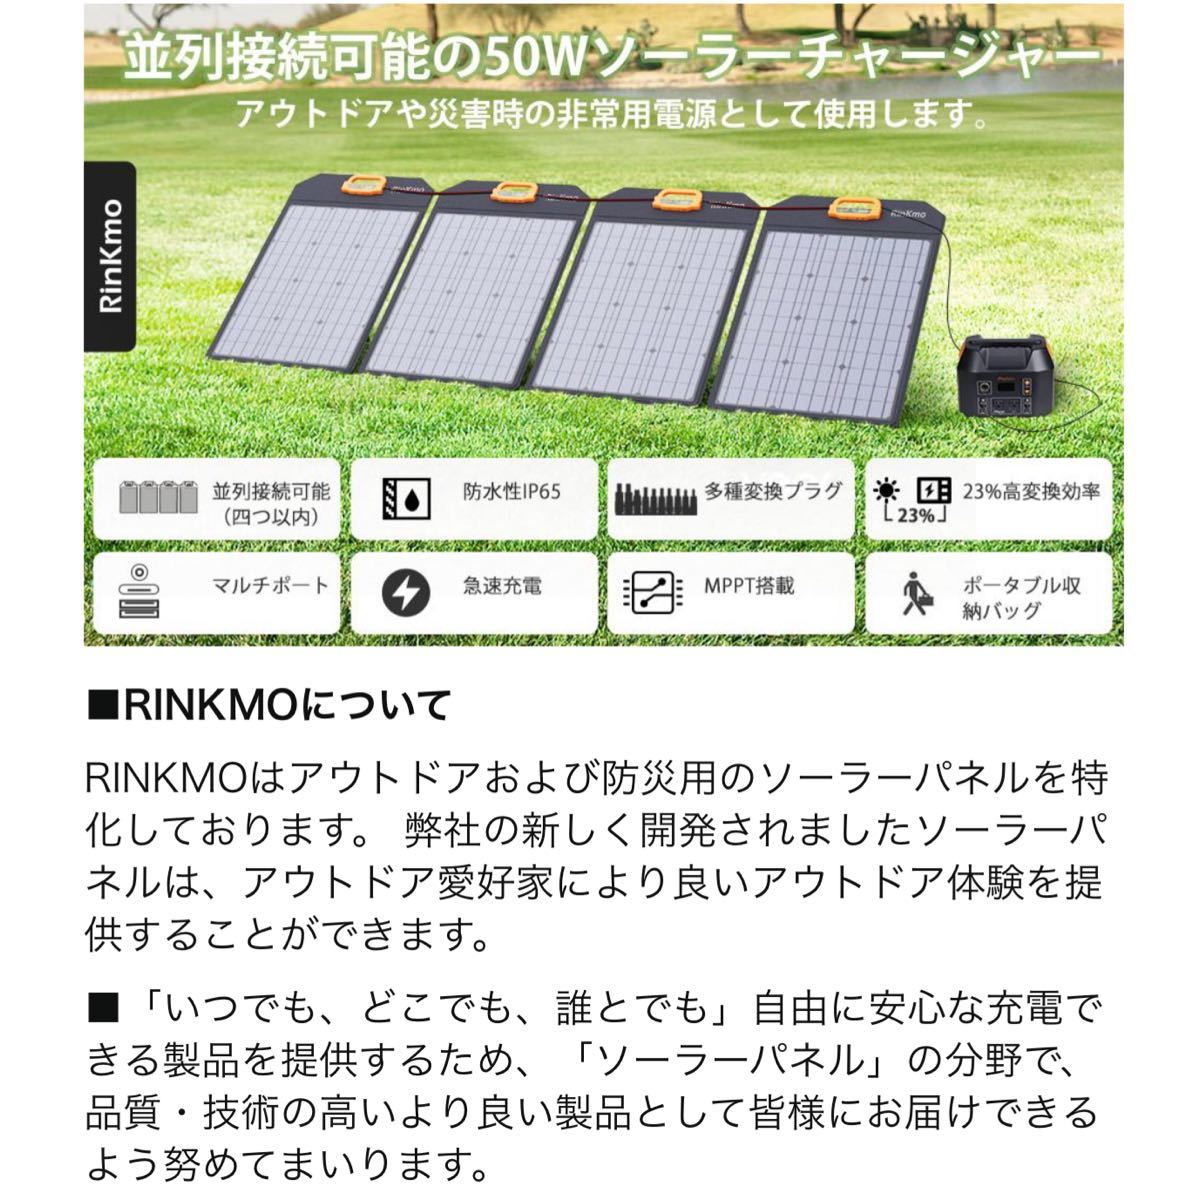 RINKMO 50W ソーラーパネル 複数並列でパワー倍増 ソーラーチャージャー太陽光発電